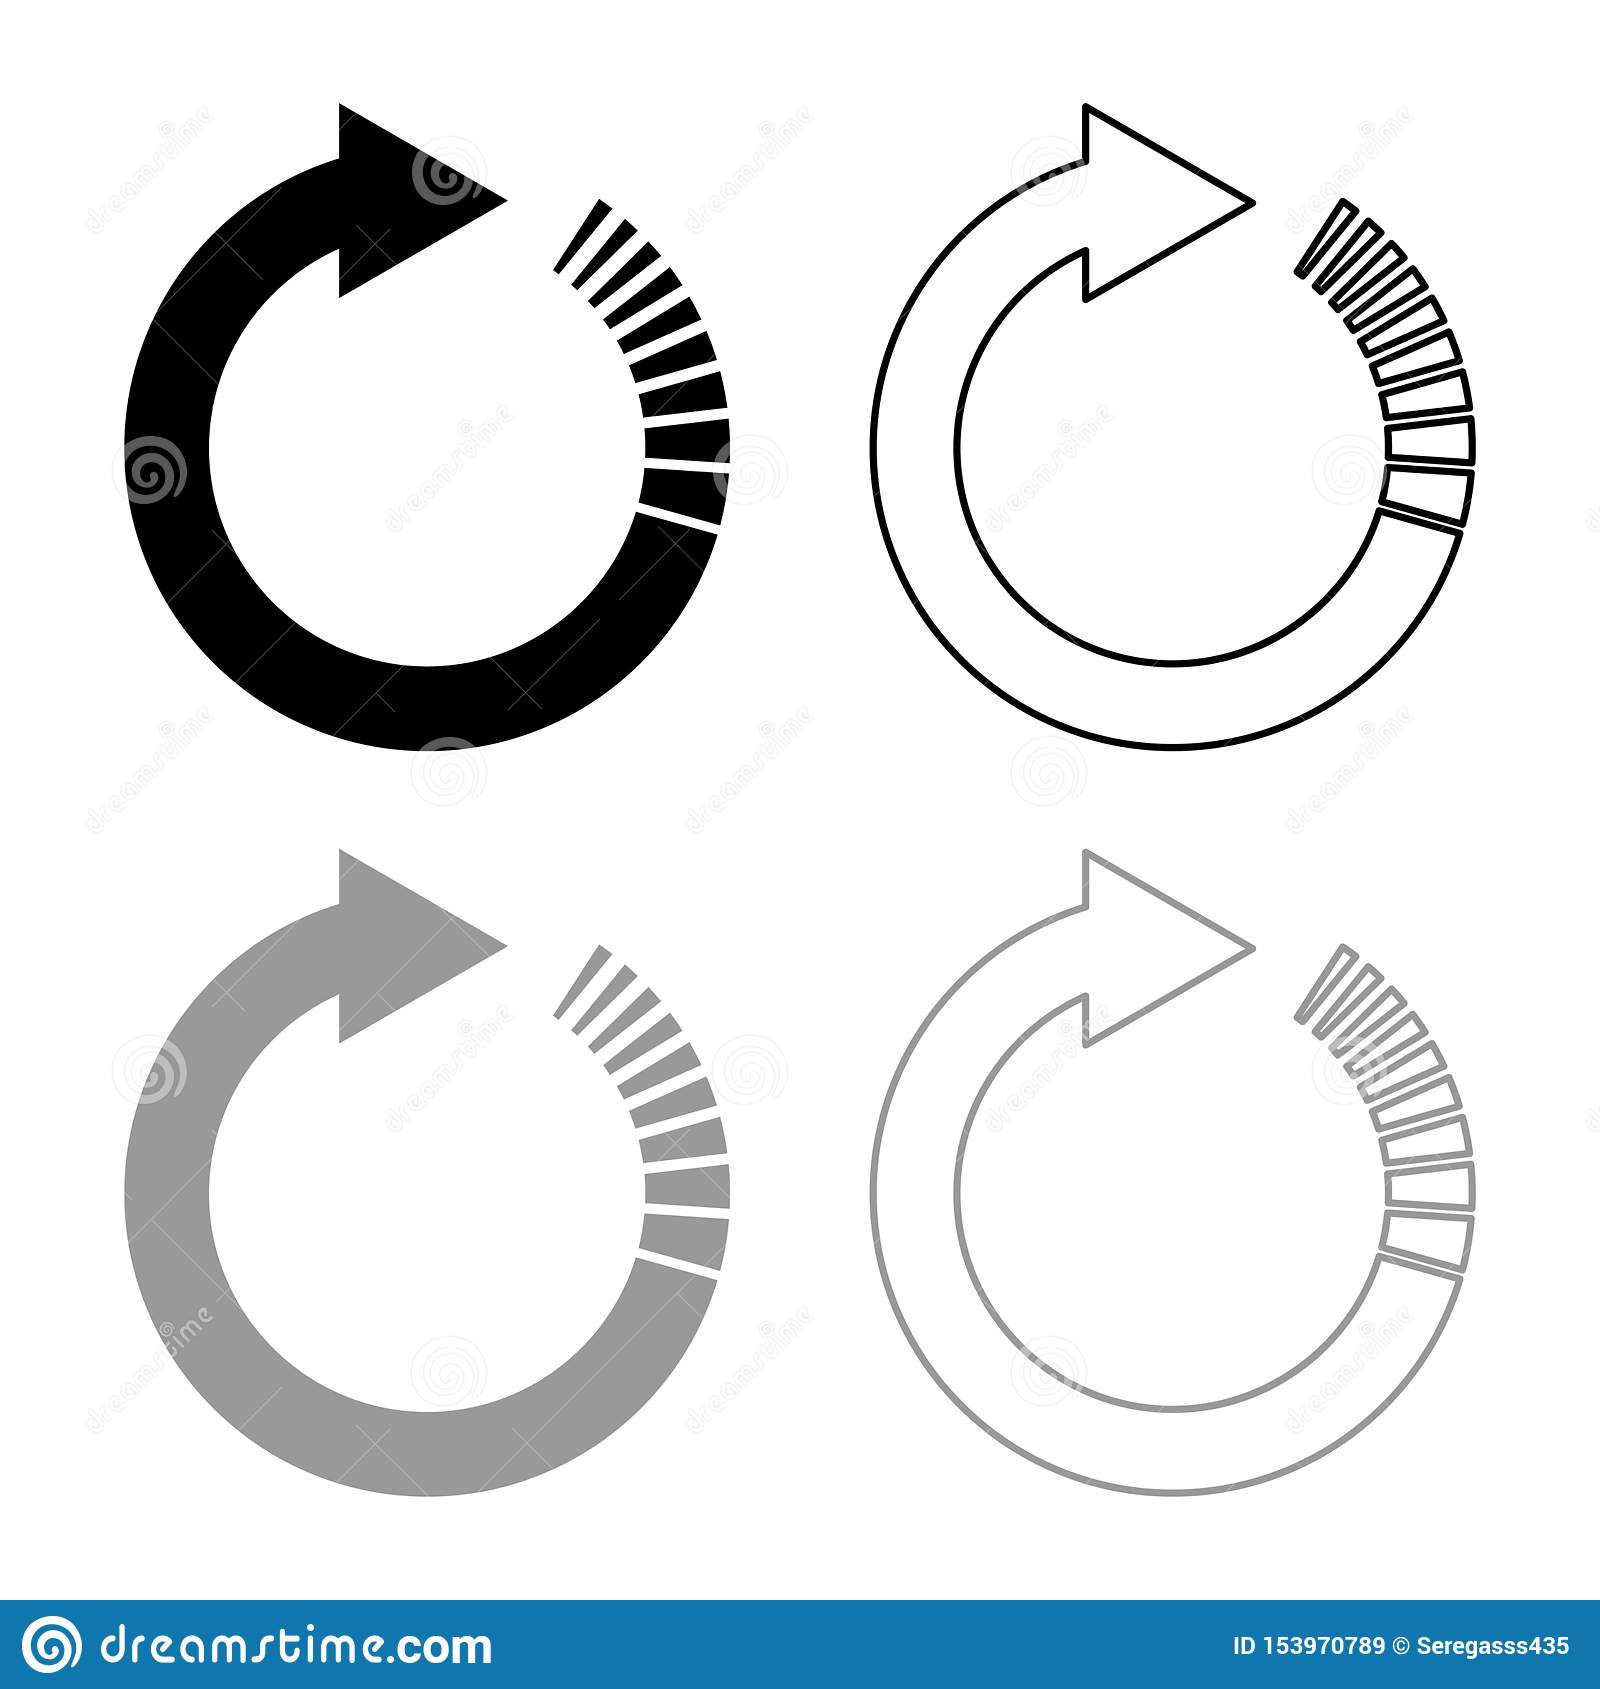 Set Of Black Arrow Circle Icons Stock Illustration - Download Image Now - iStock